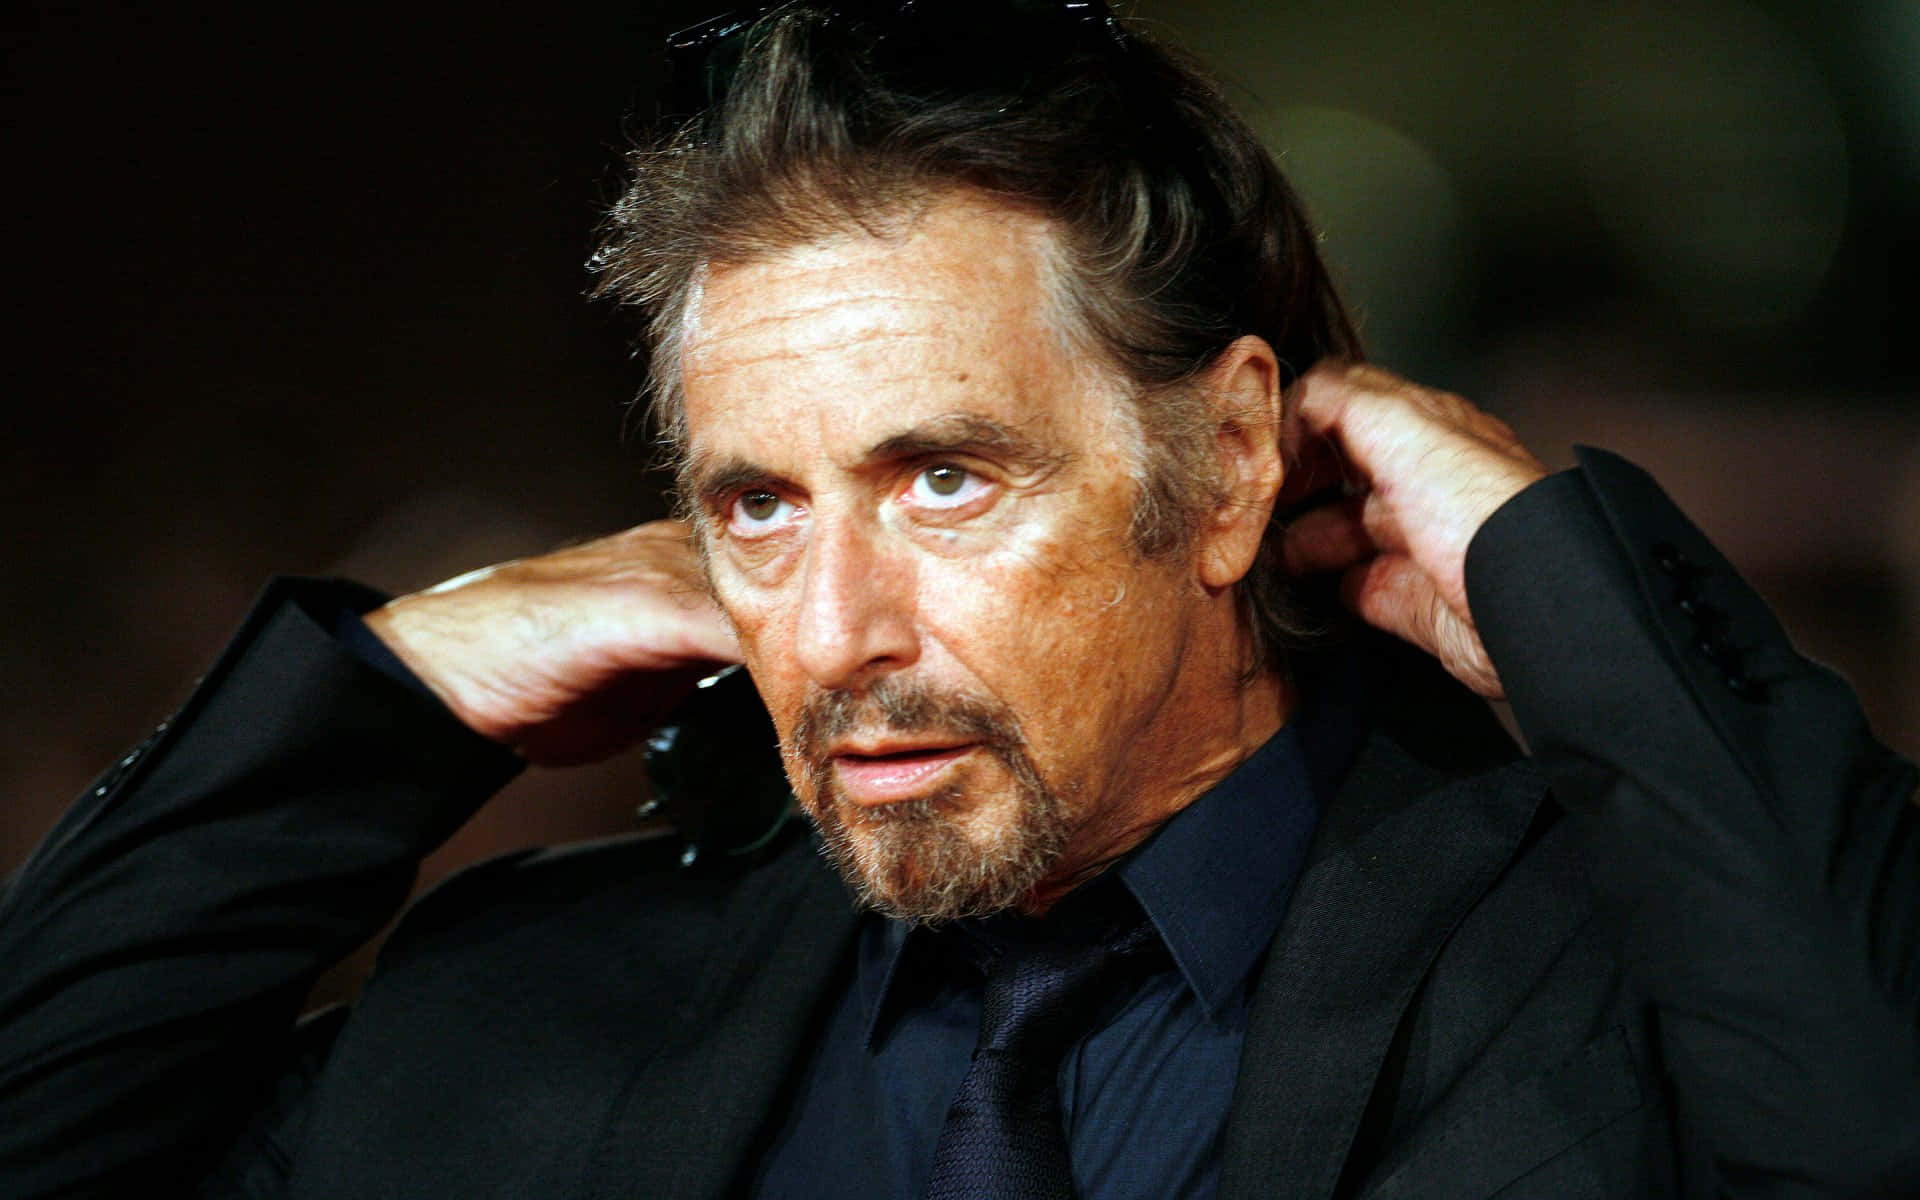 Imagendel Icónico Actor Al Pacino